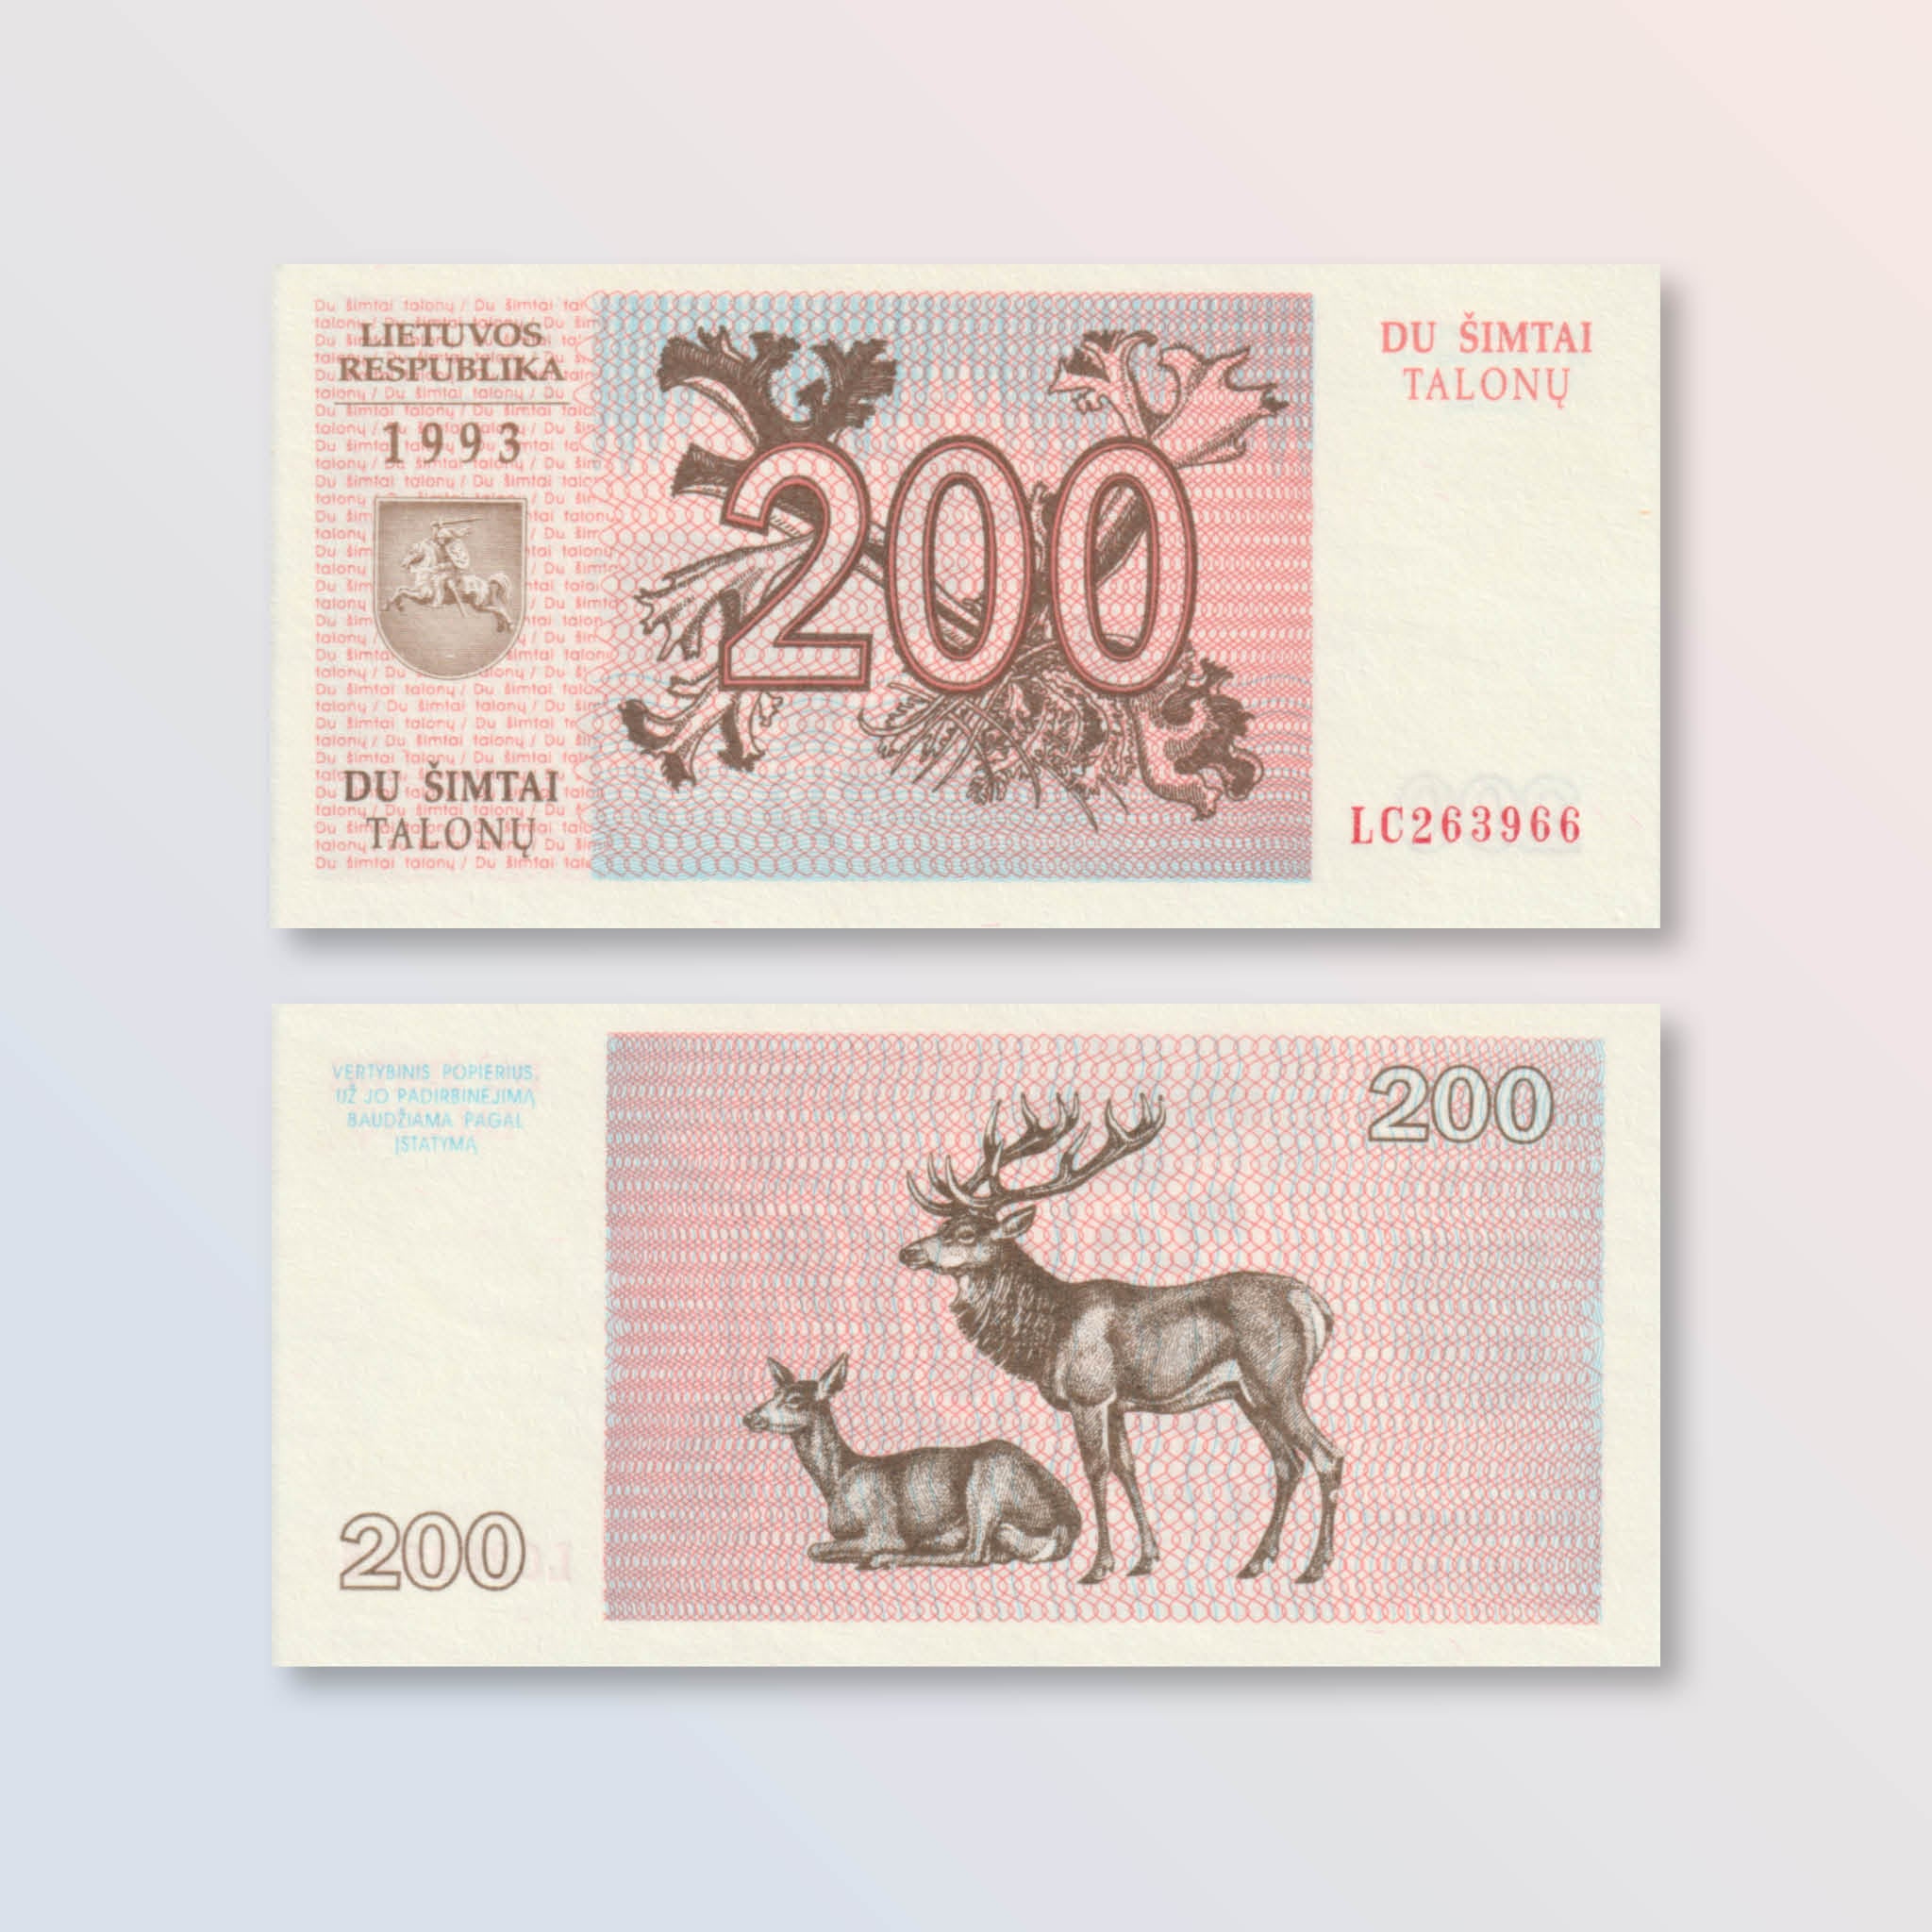 Lithuania 200 Talonas, 1993, B156a, P45, UNC - Robert's World Money - World Banknotes